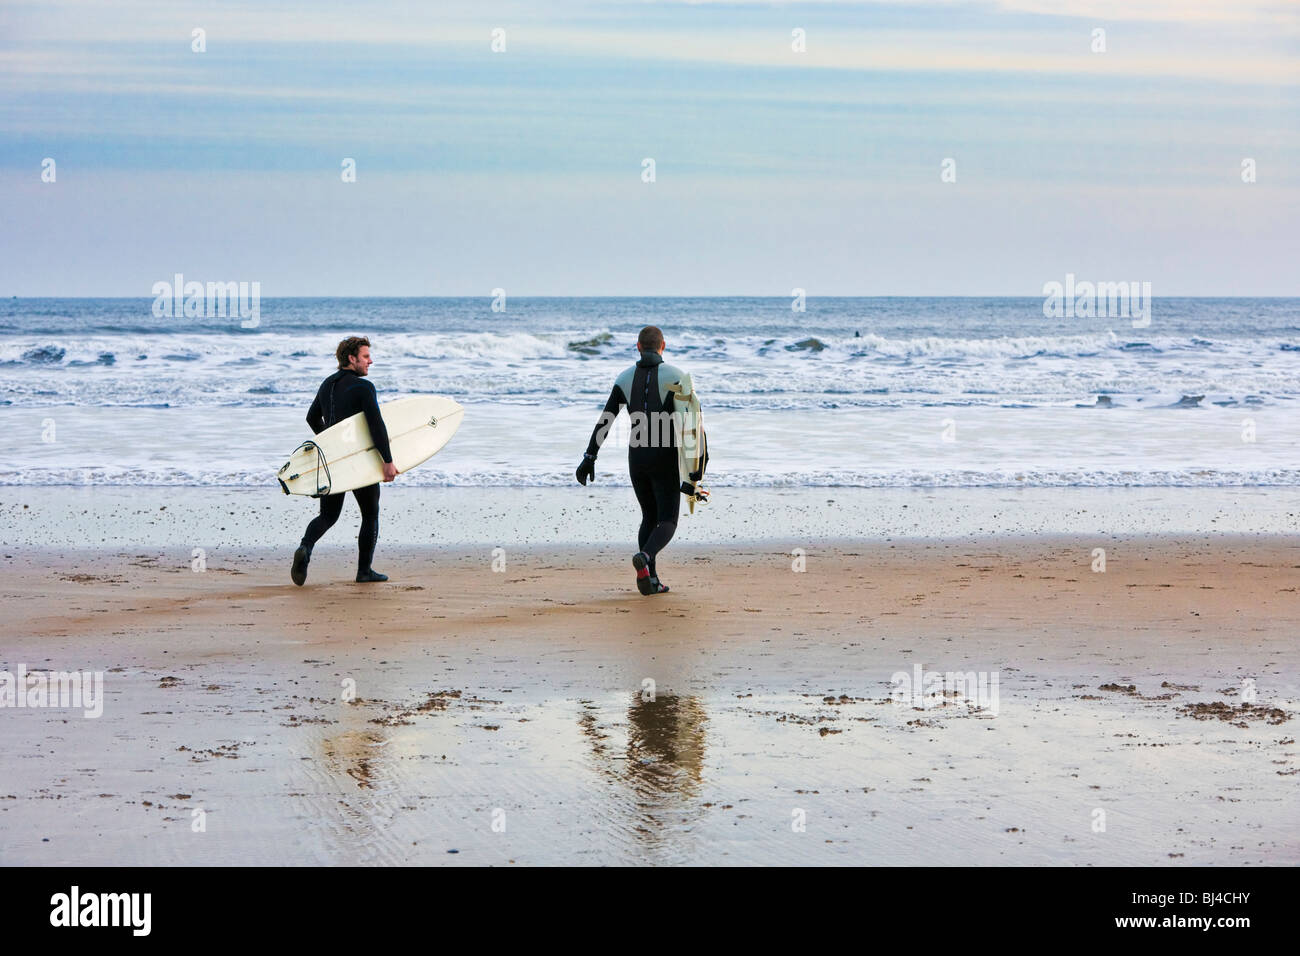 Surfers on a beach UK Stock Photo